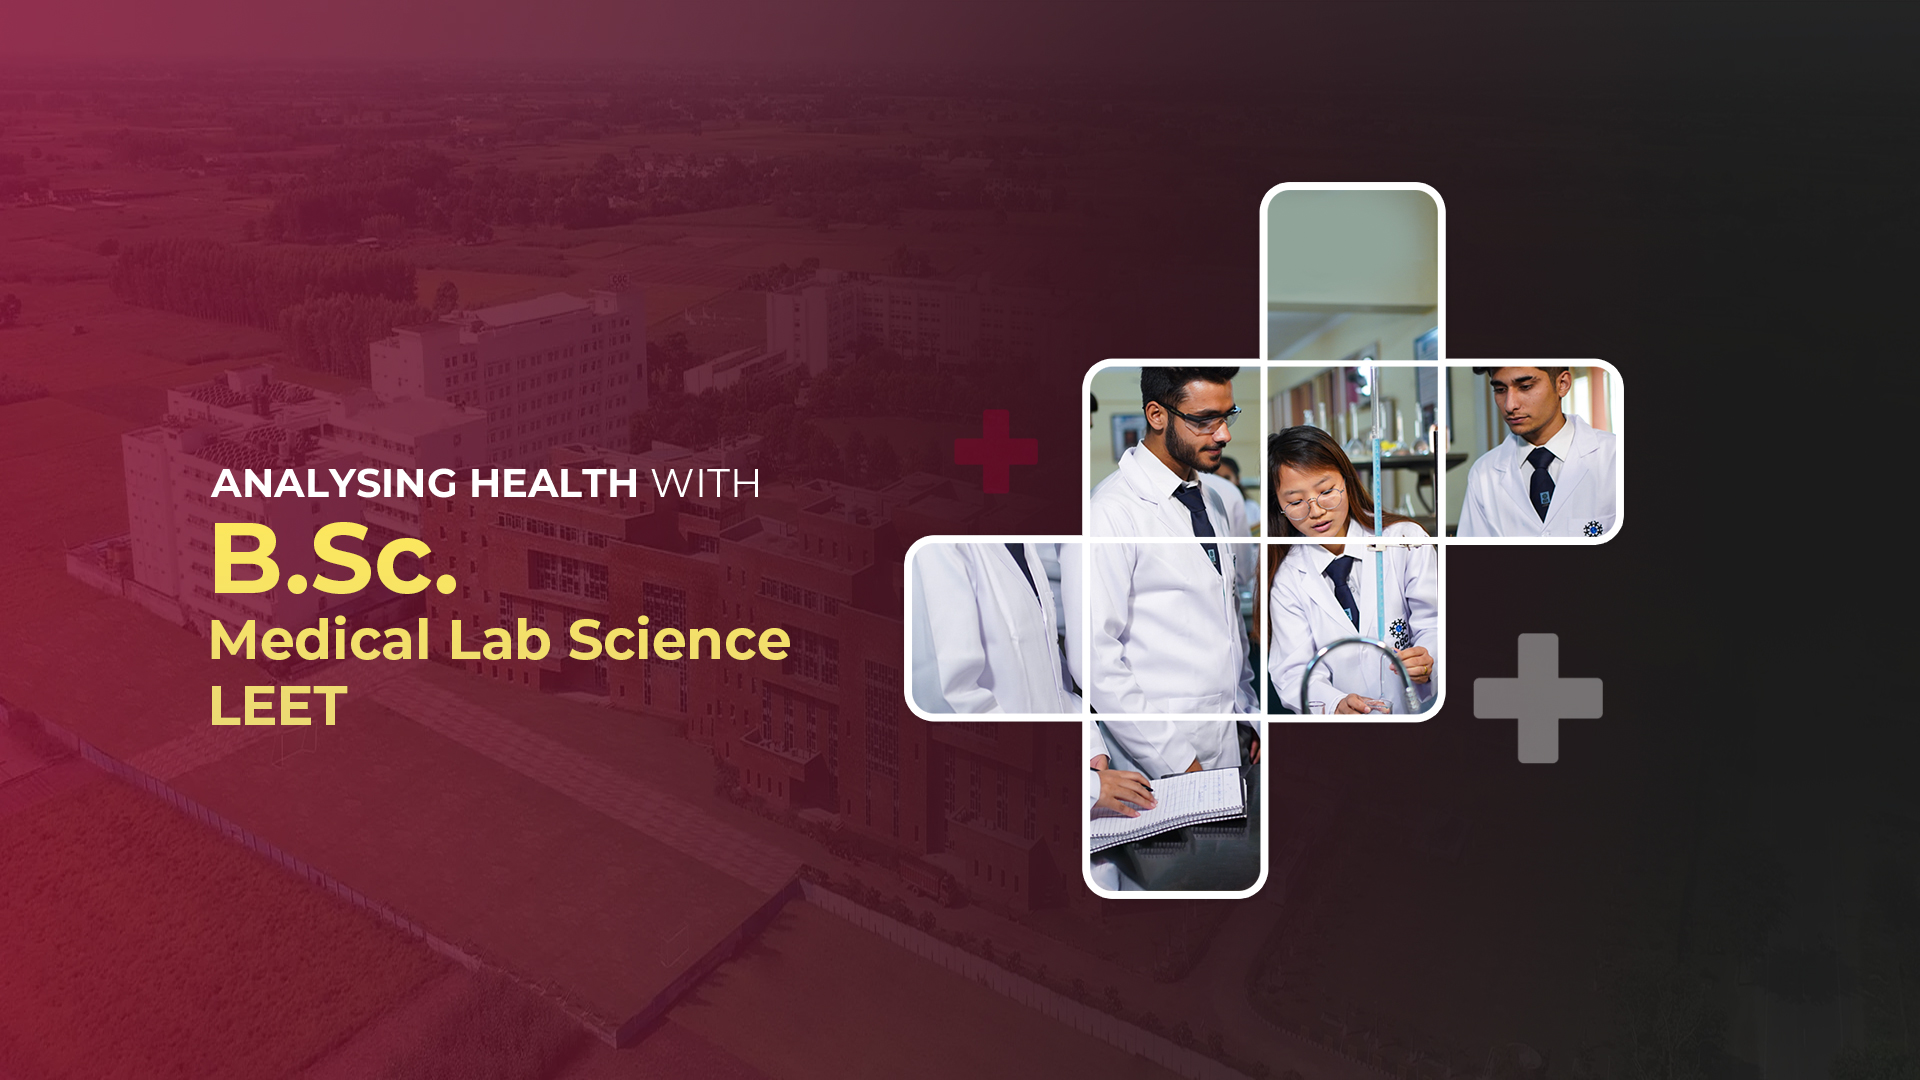 B.Sc. Medical Laboratory Science Leet